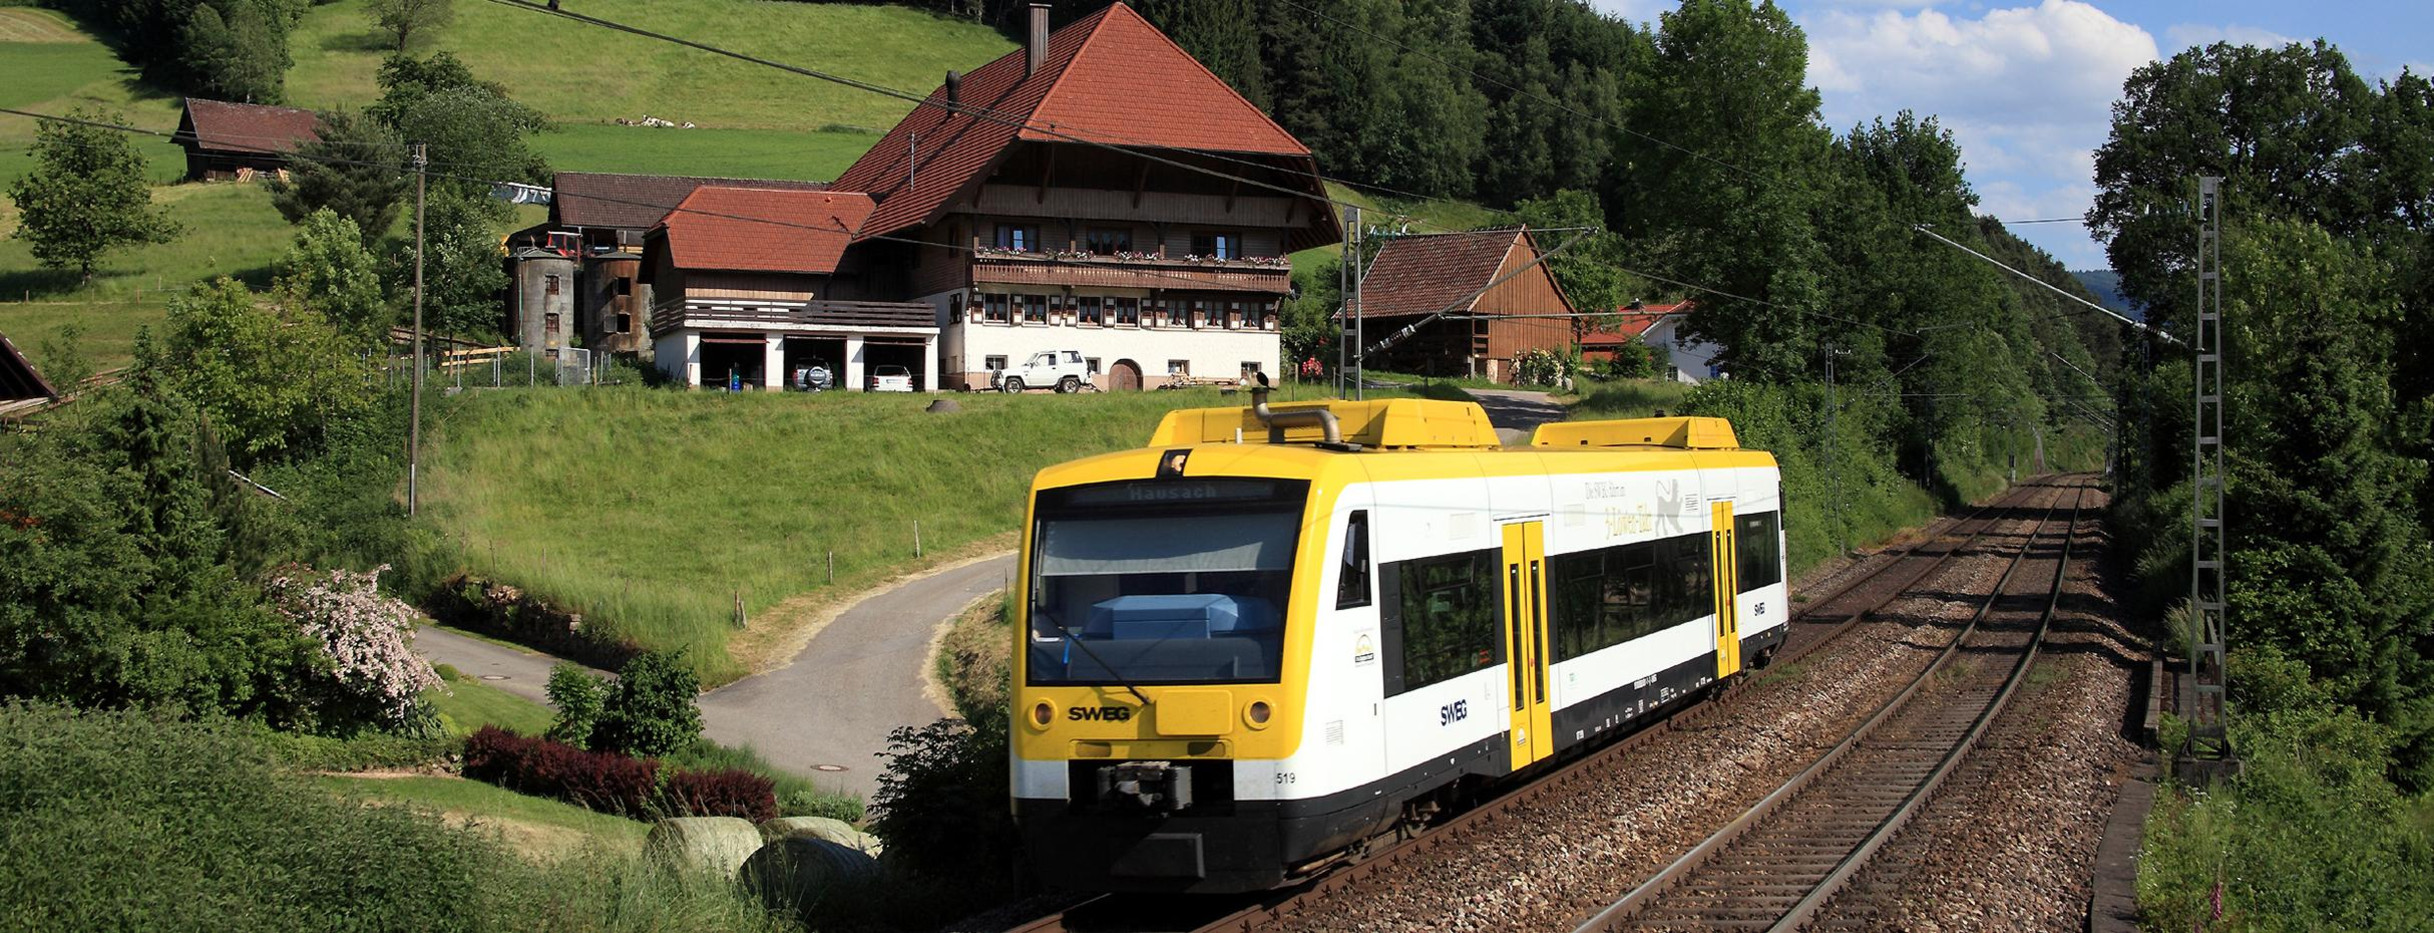 Zug der Ortenau-S-Bahn im Landesdesign (Bild: www.bahnstatistik.de)